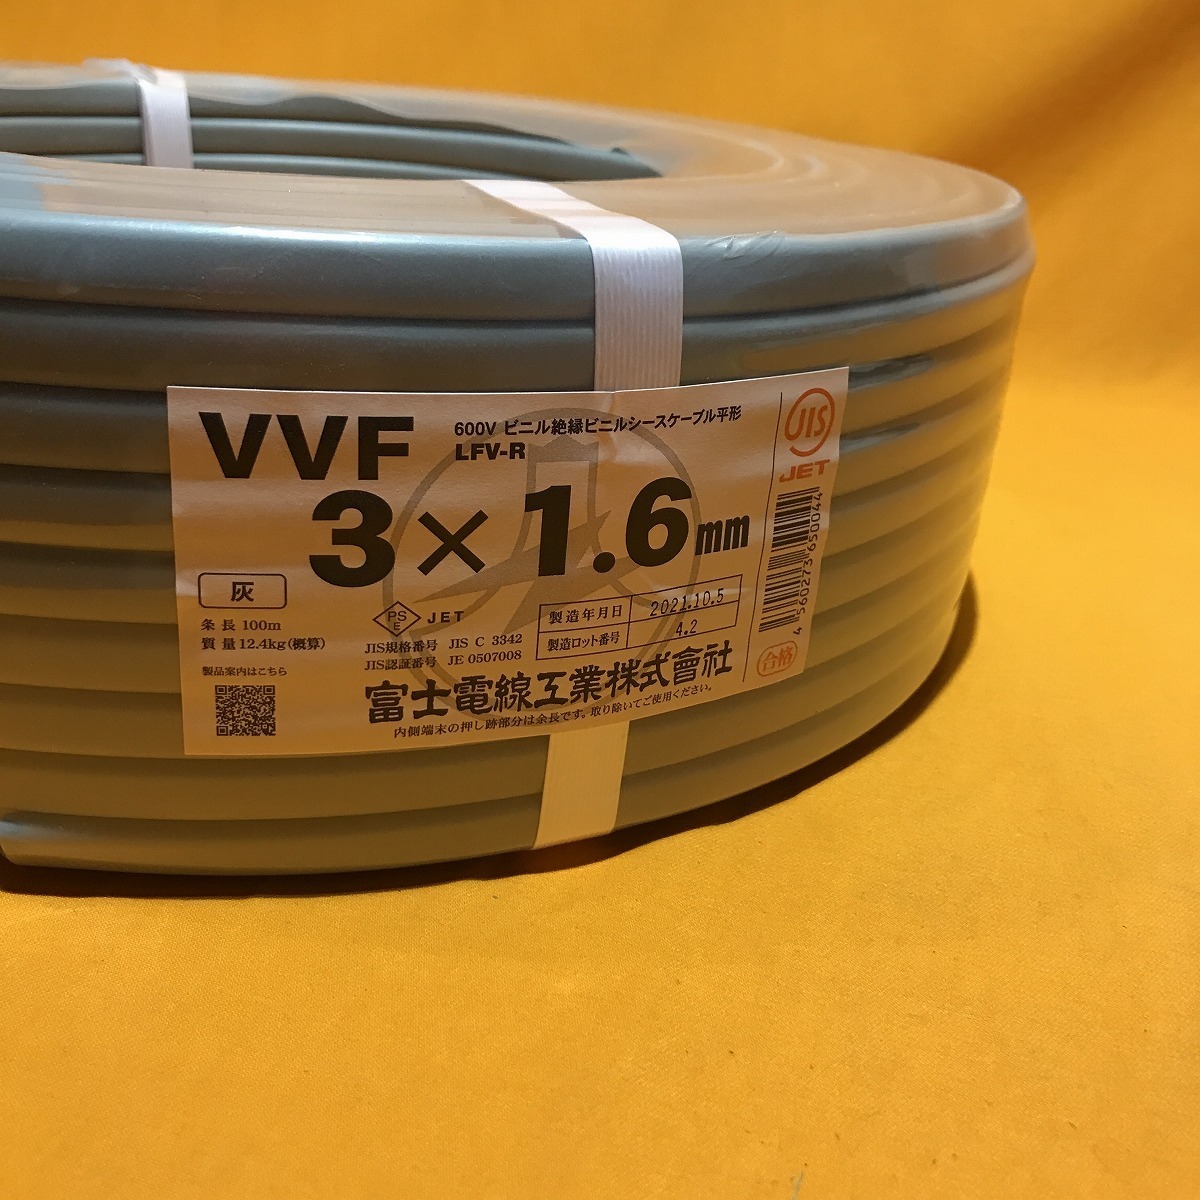 限定特価】 VVF 灰(100m) 3芯 VVFケーブル 富士電線 1.6mm × 3 - 電線 - labelians.fr